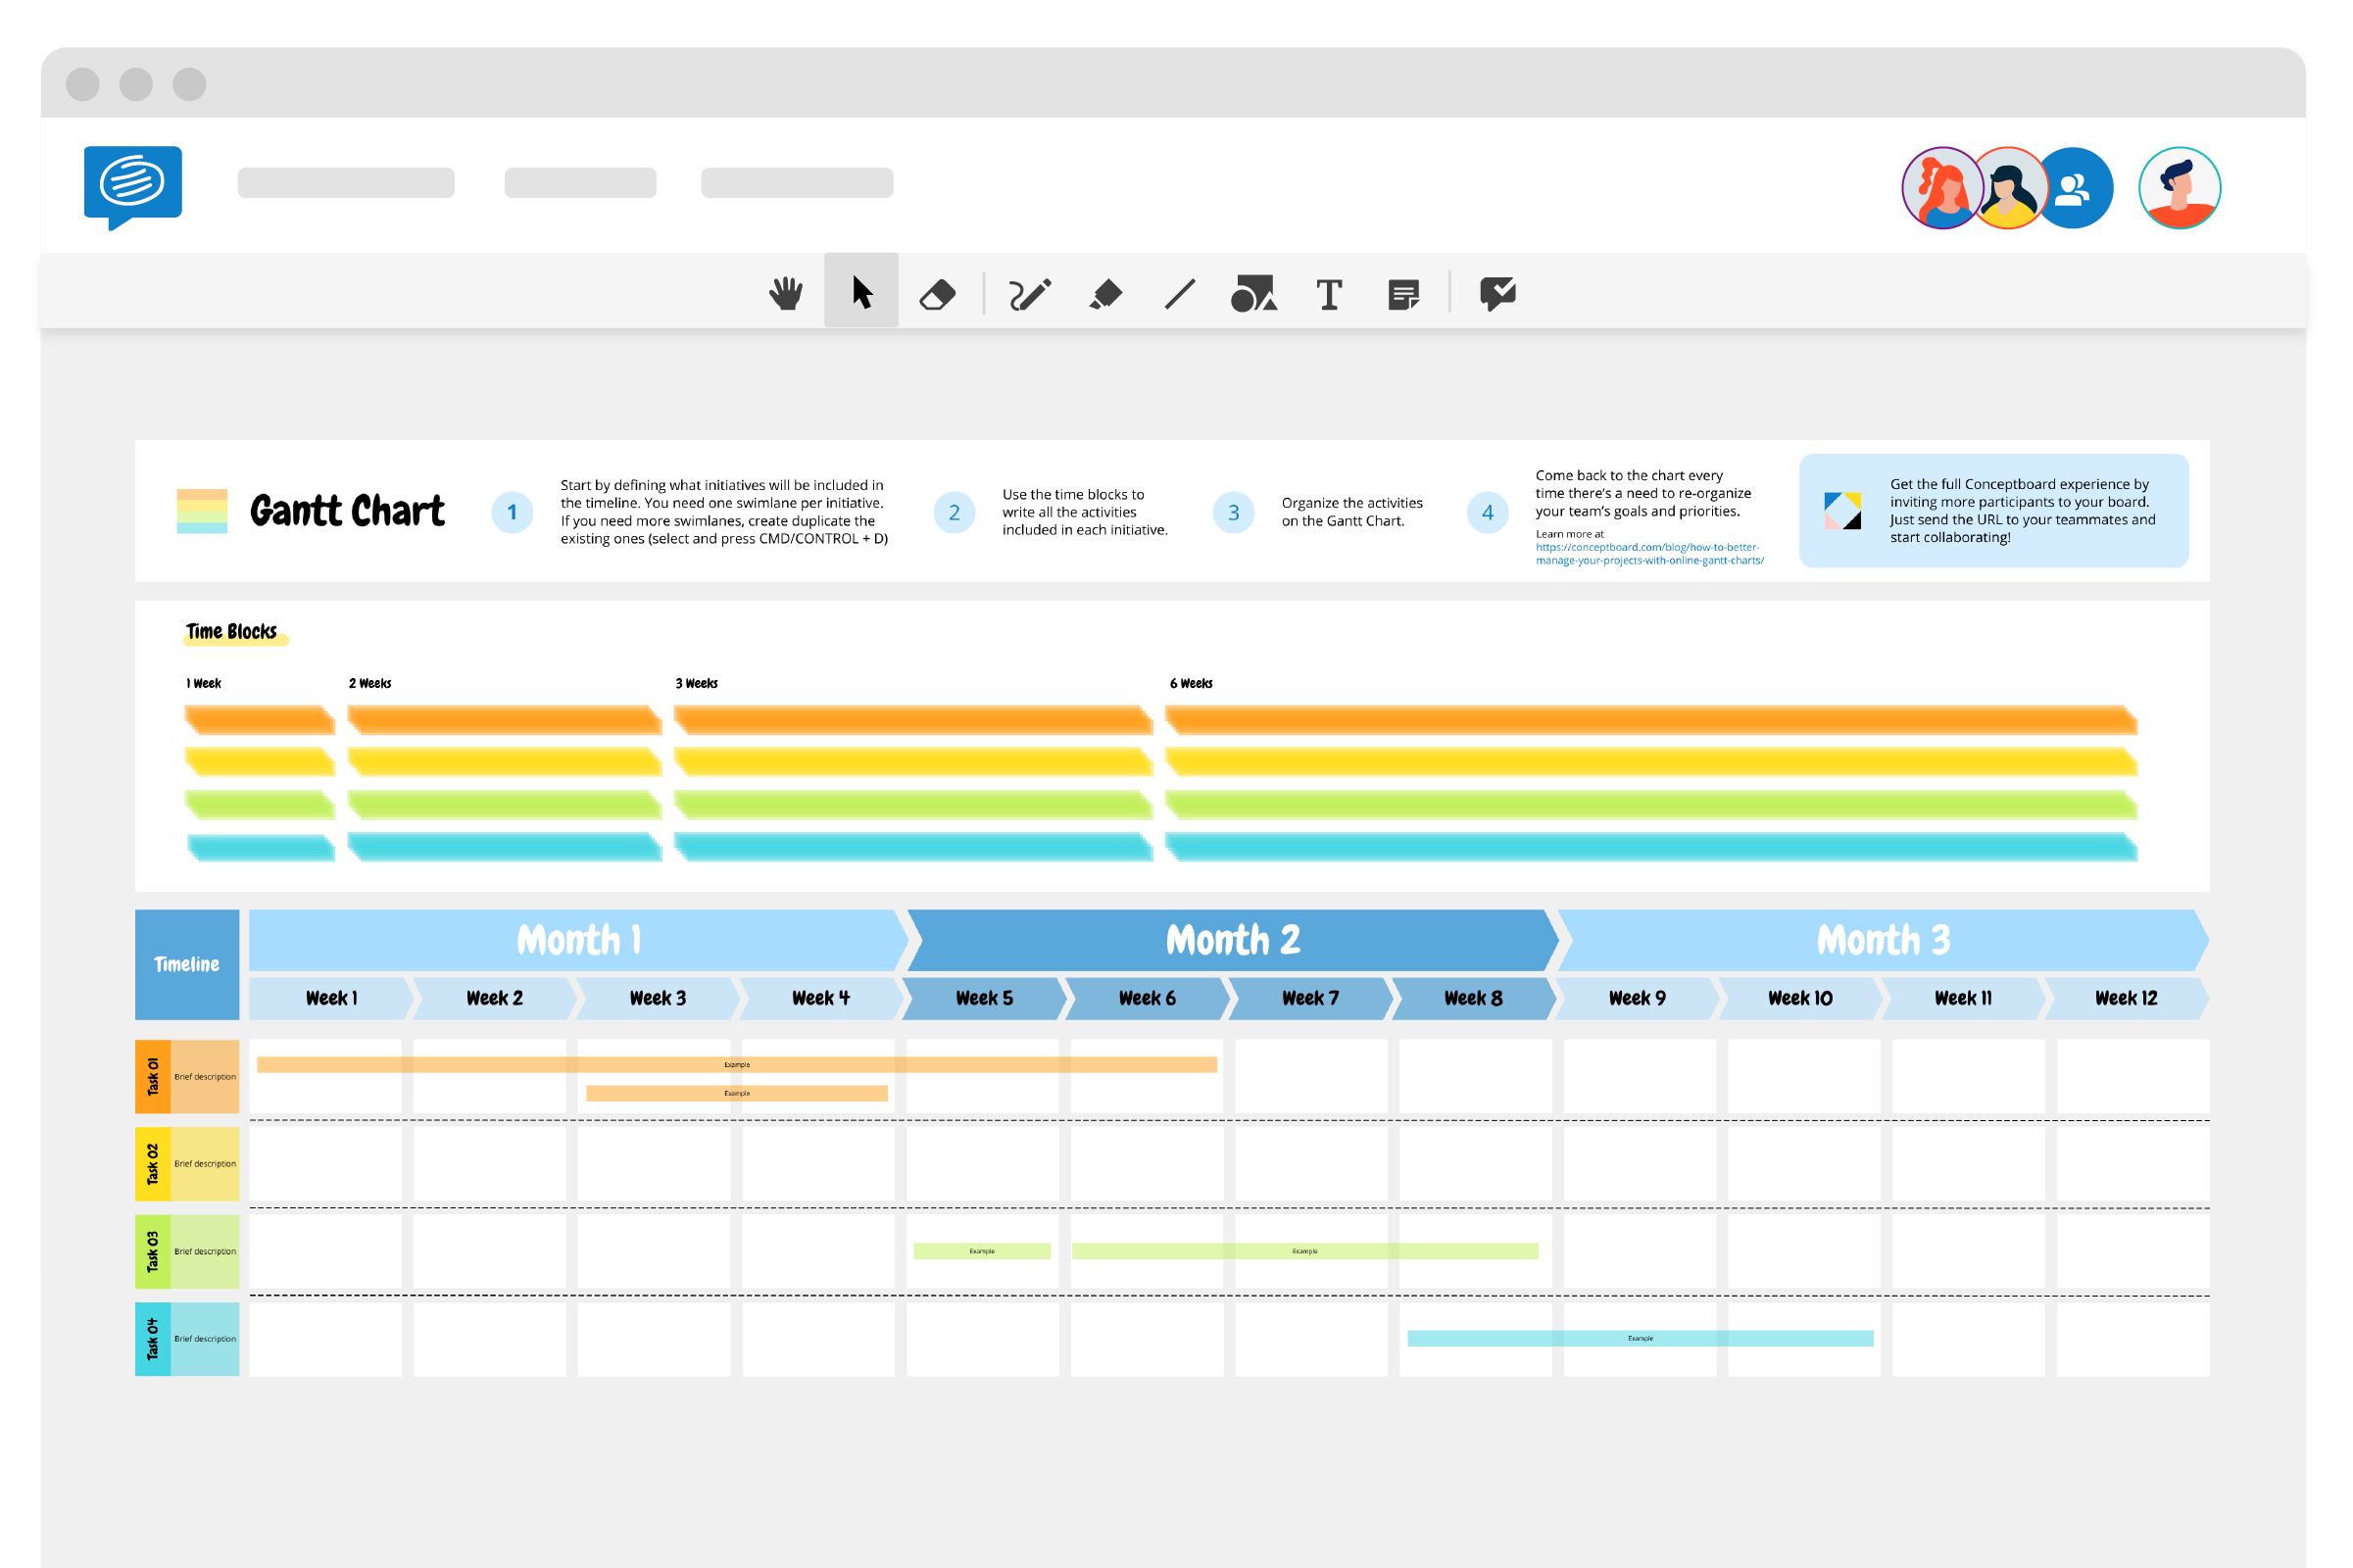 Gantt Chart Template from Conceptboard